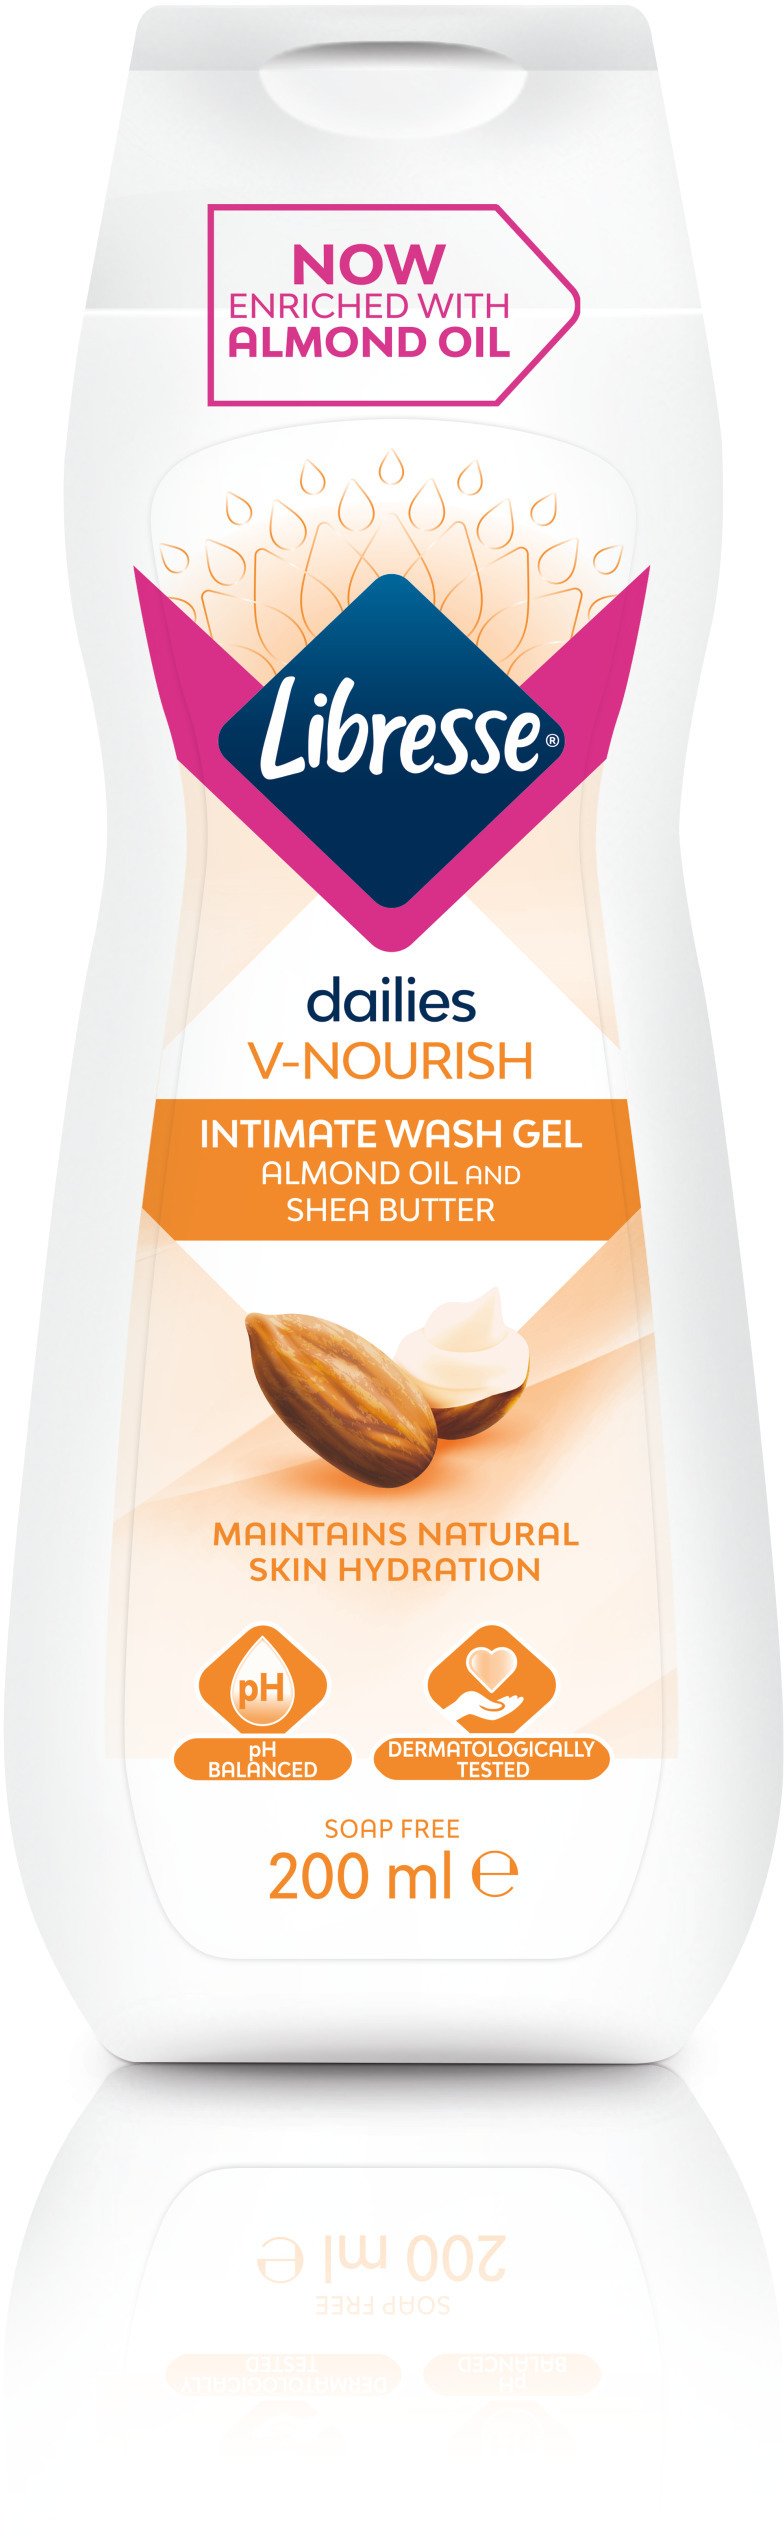 Libresse DaiIies V-Nourish Intimate Wash Gel 200 ml